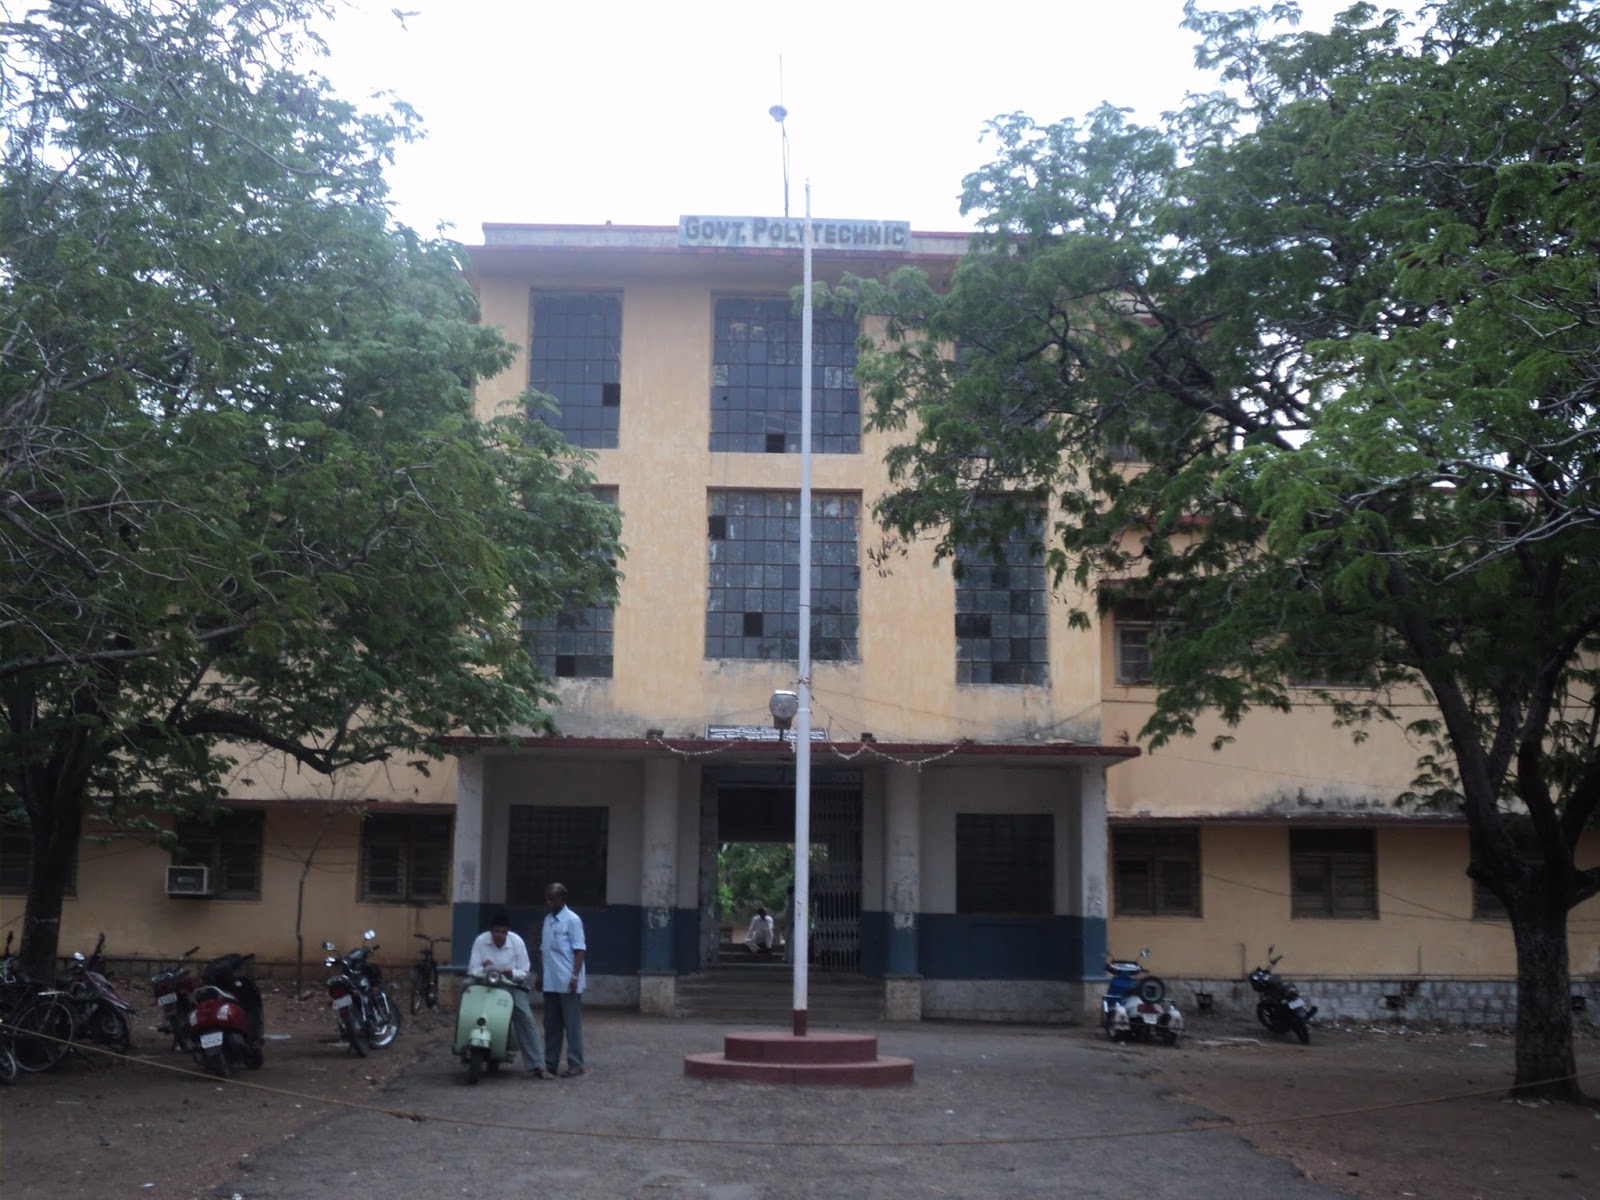 Government Polytechnic, Gulbarga Image